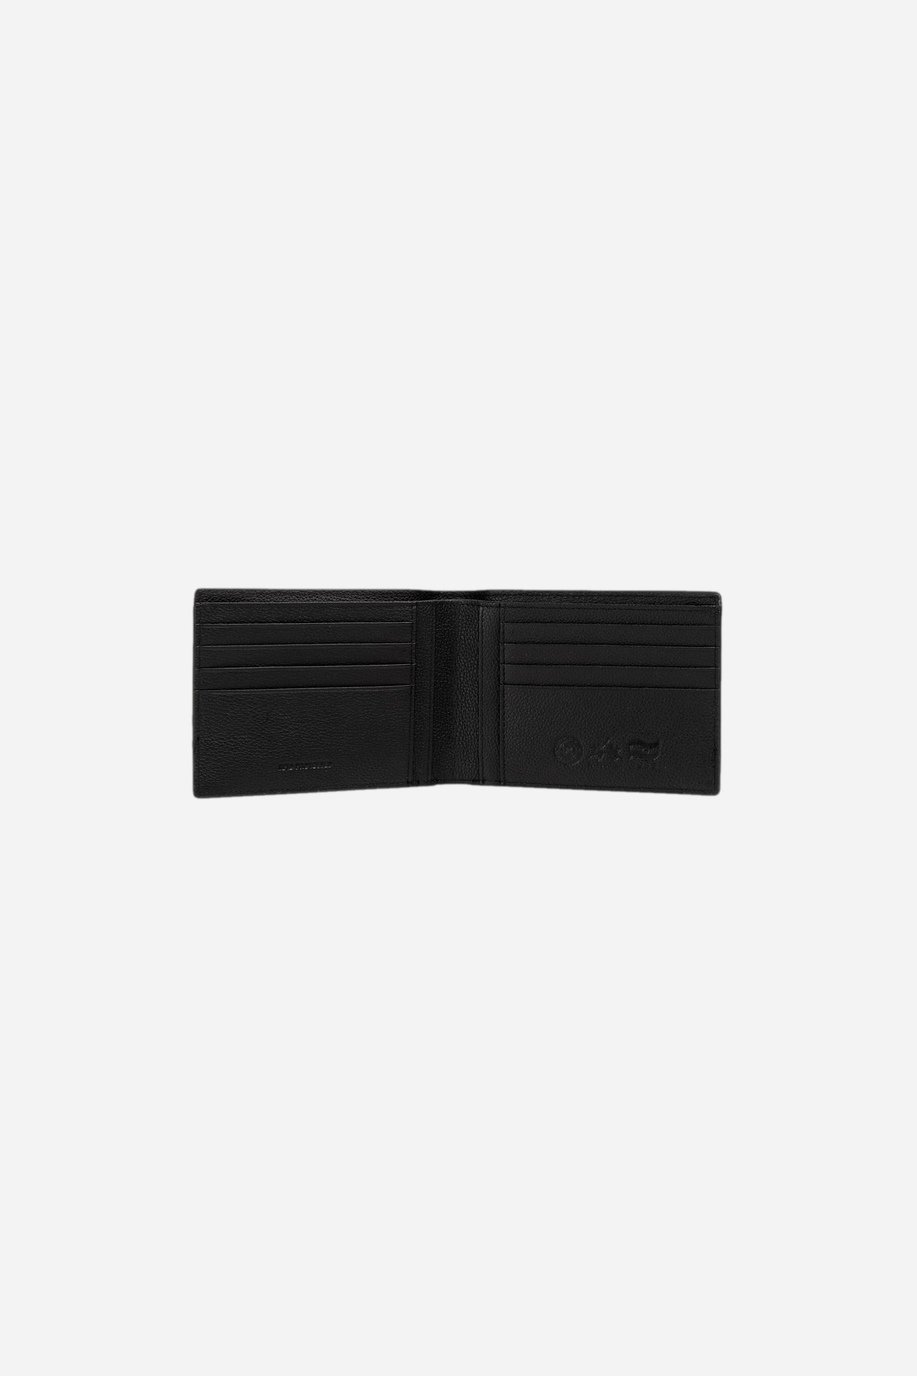 Men's leather wallet - Wallets and key chains | La Martina - Official Online Shop